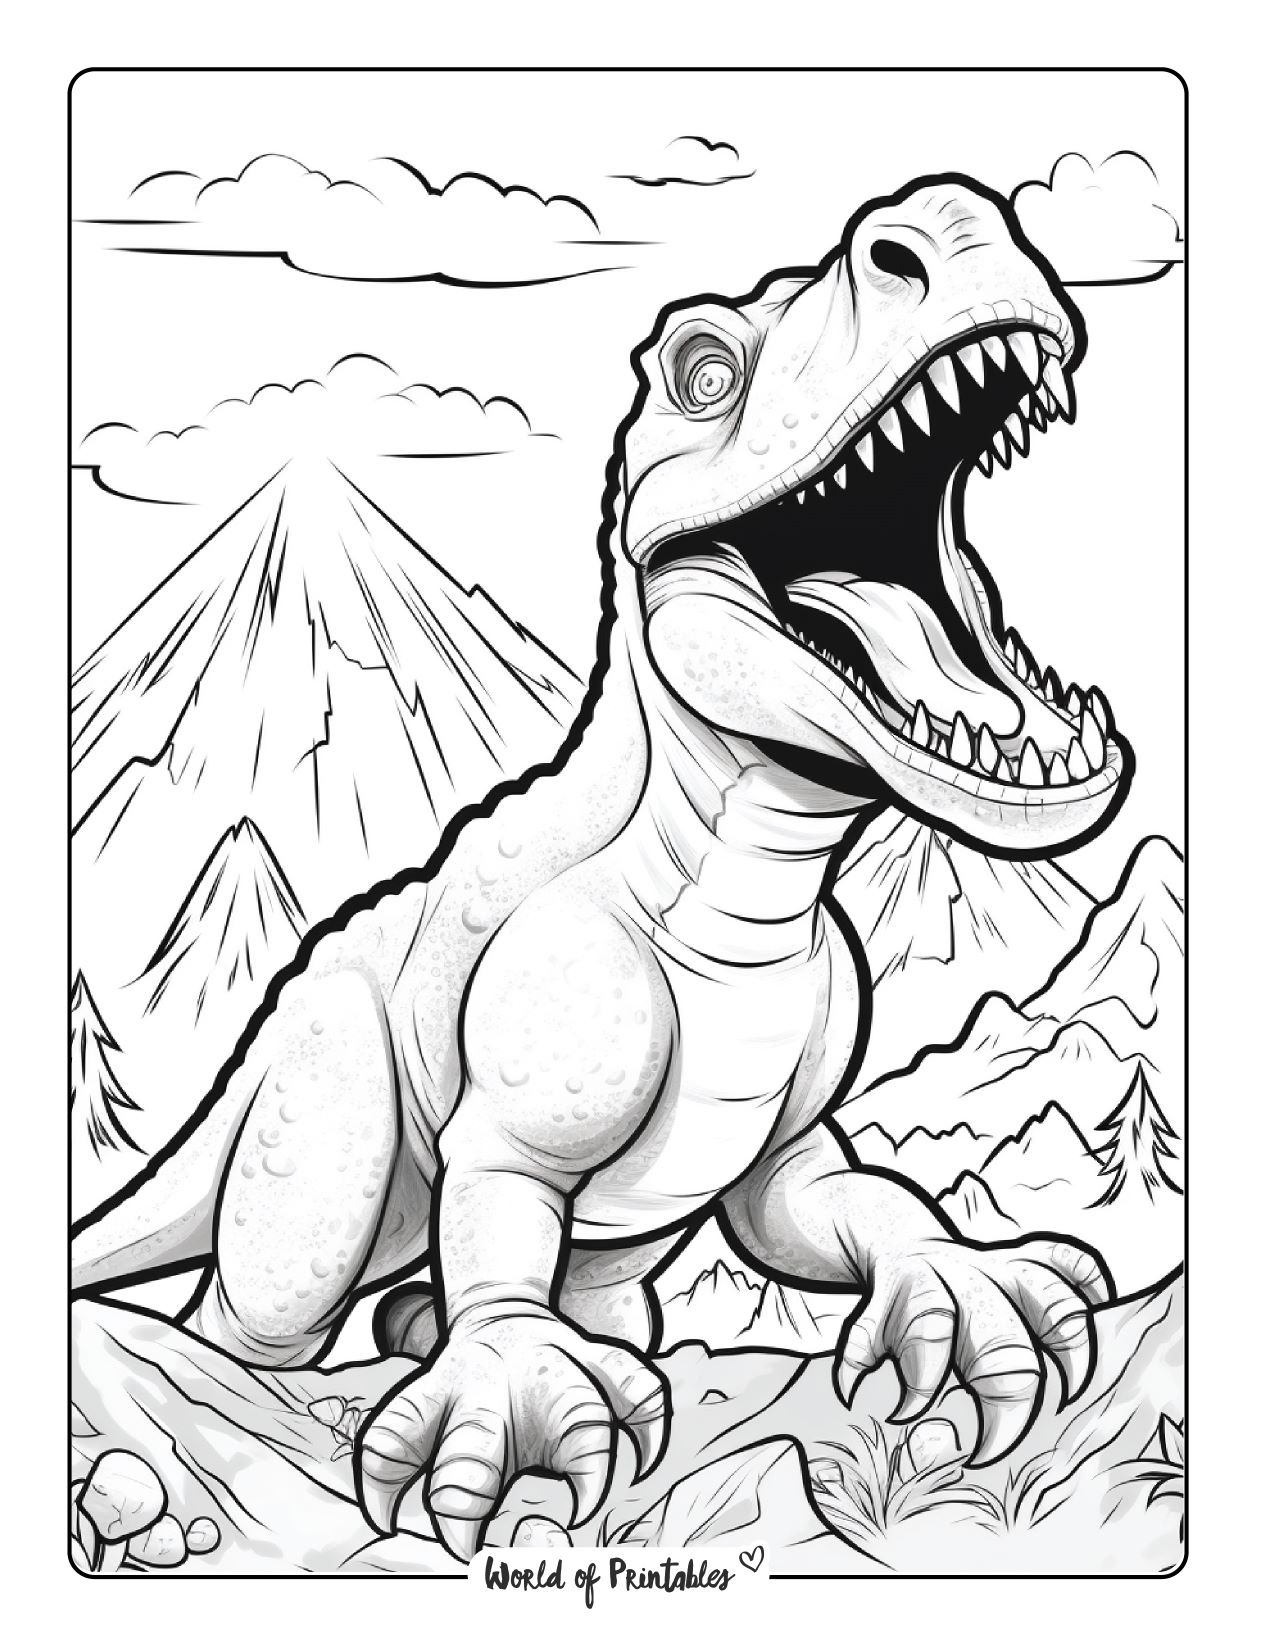 T rex coloring pages